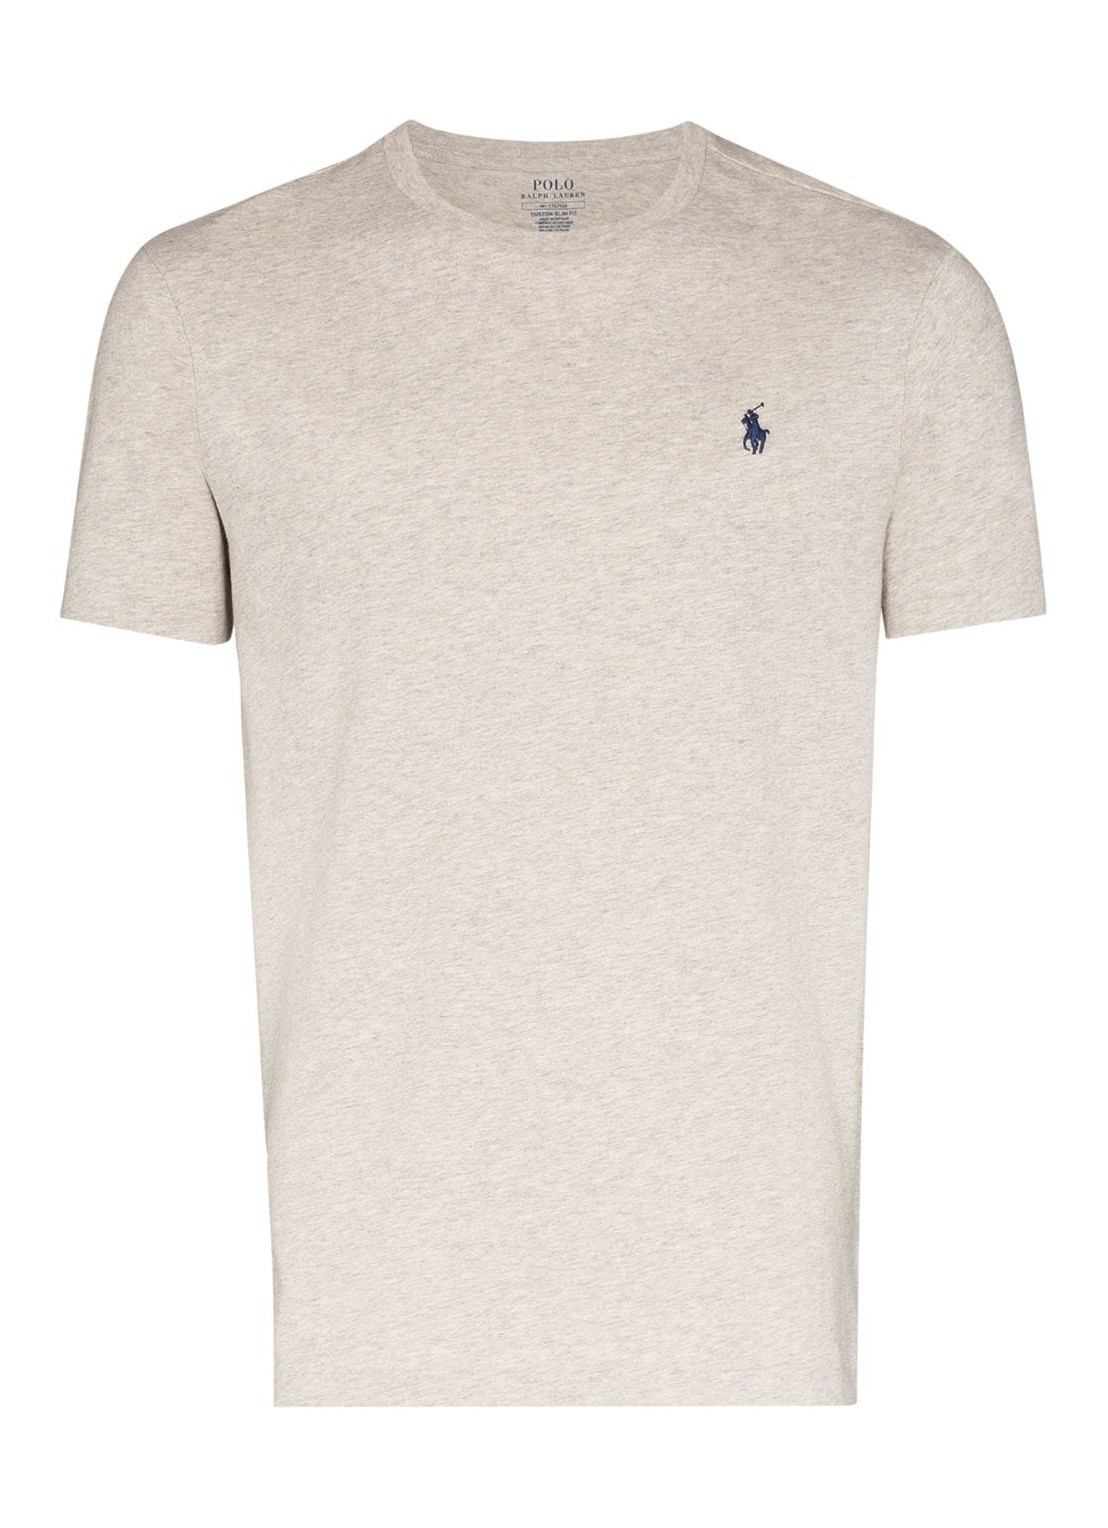 Camiseta polo ralph lauren jersey ssl tshirt - 710680785002 new grey heather talla XXL
 